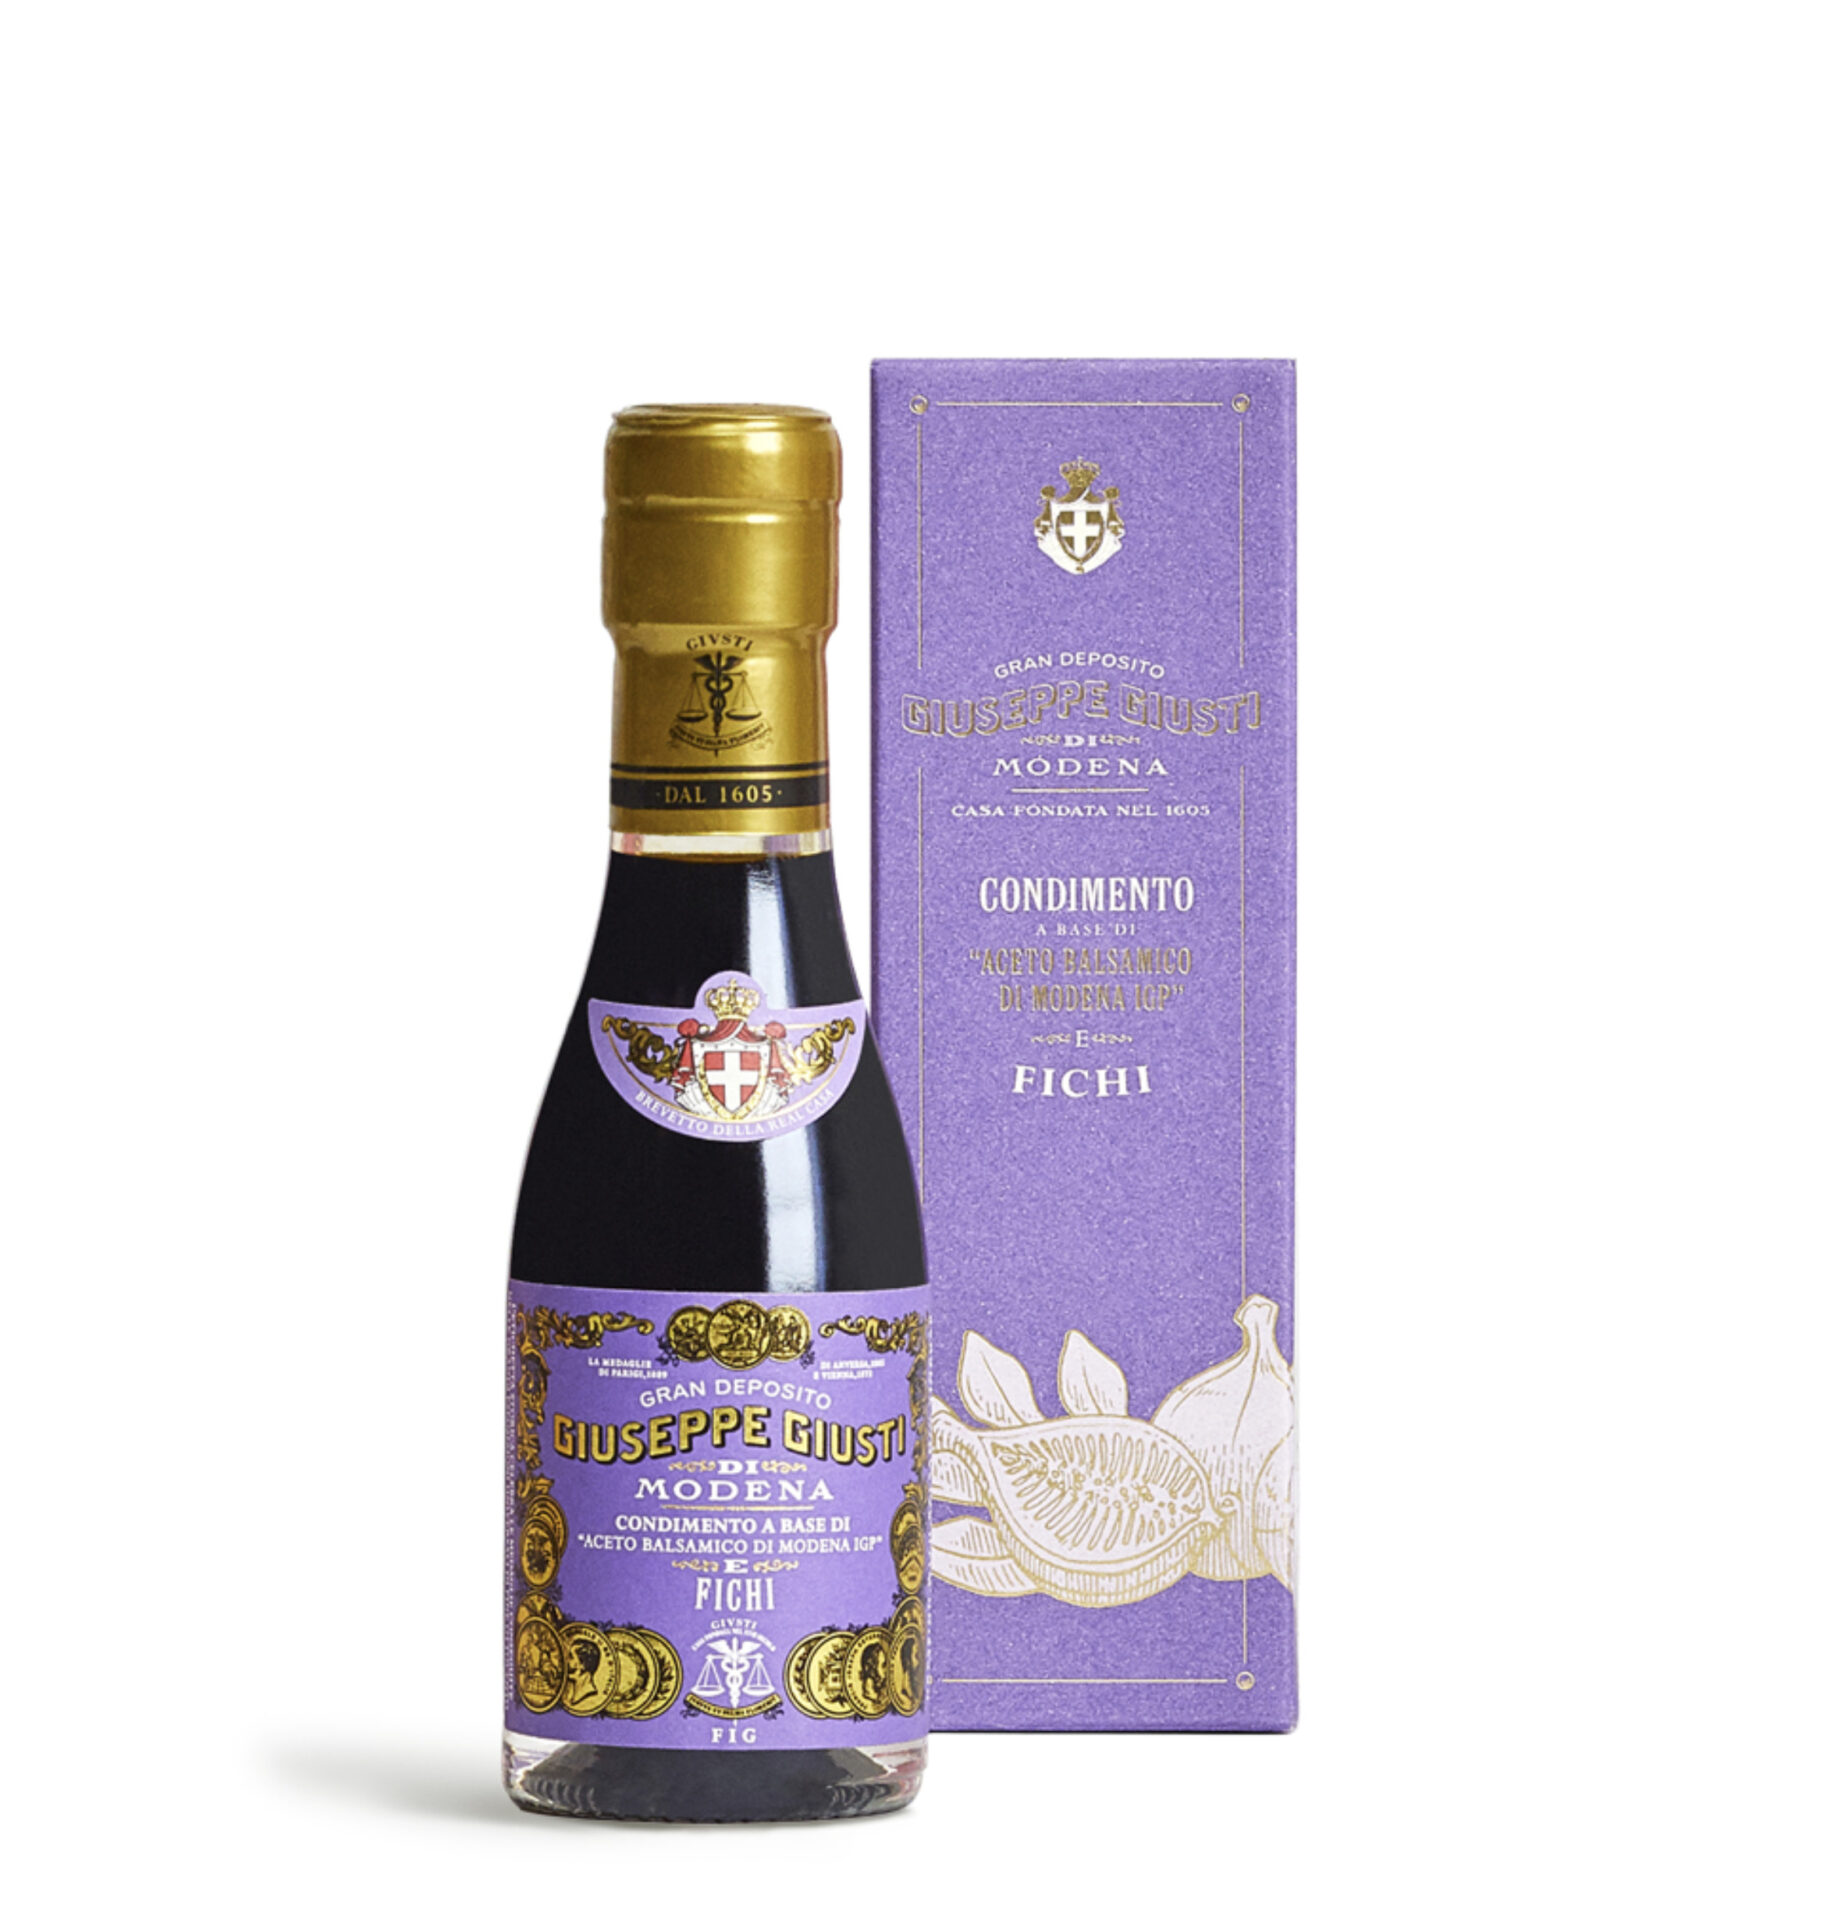 Giuseppe Giusti Gift Box with Balsamic Vinegar of Modena PGI and Figs